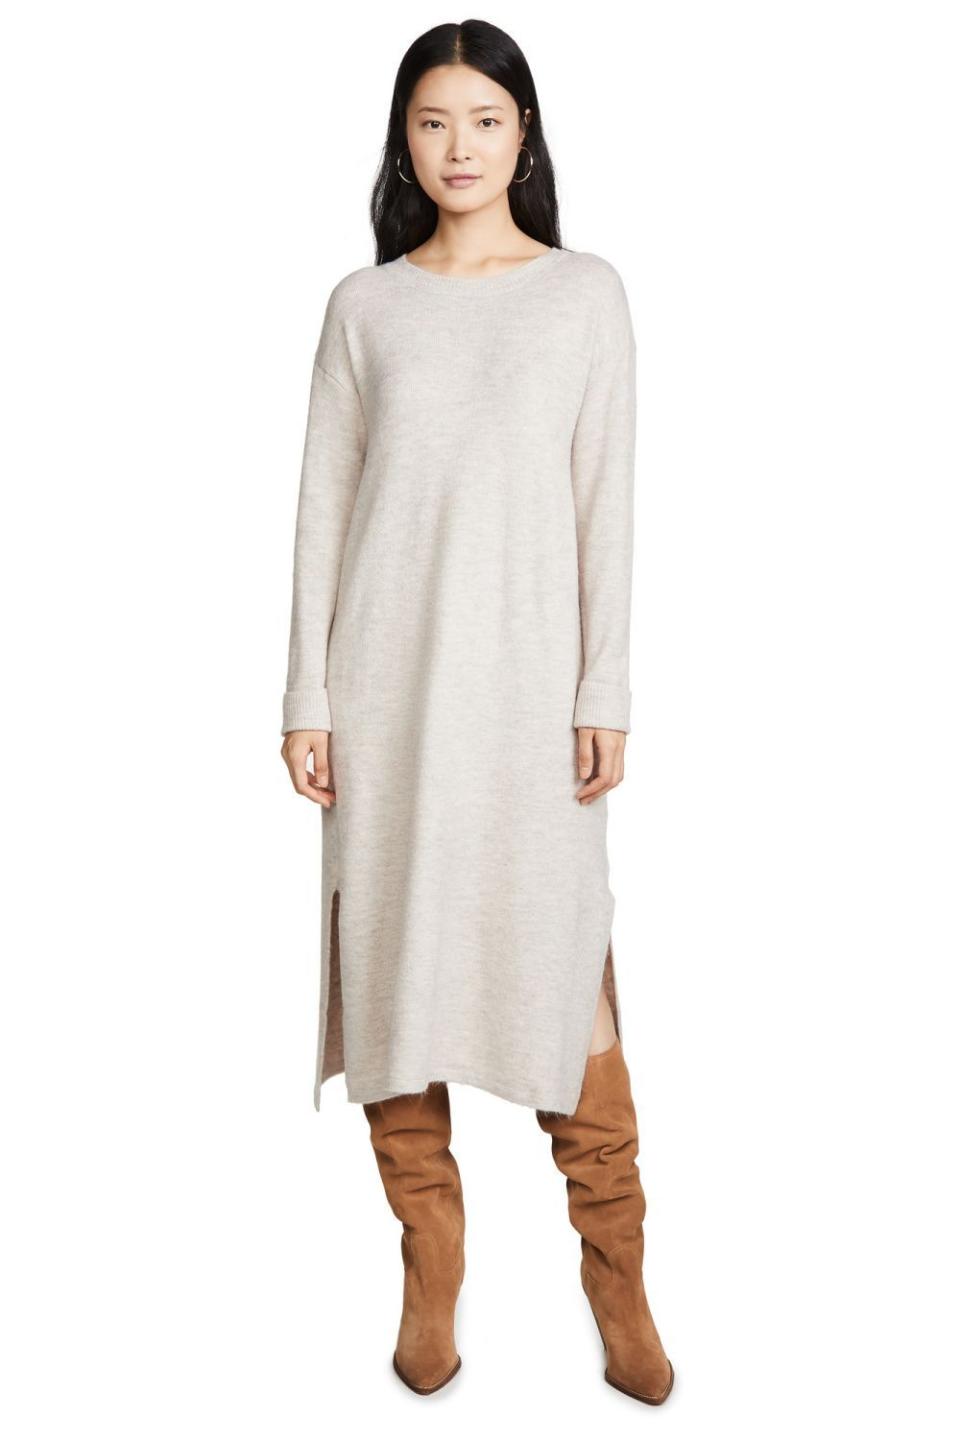 45) Calli Sweater Dress